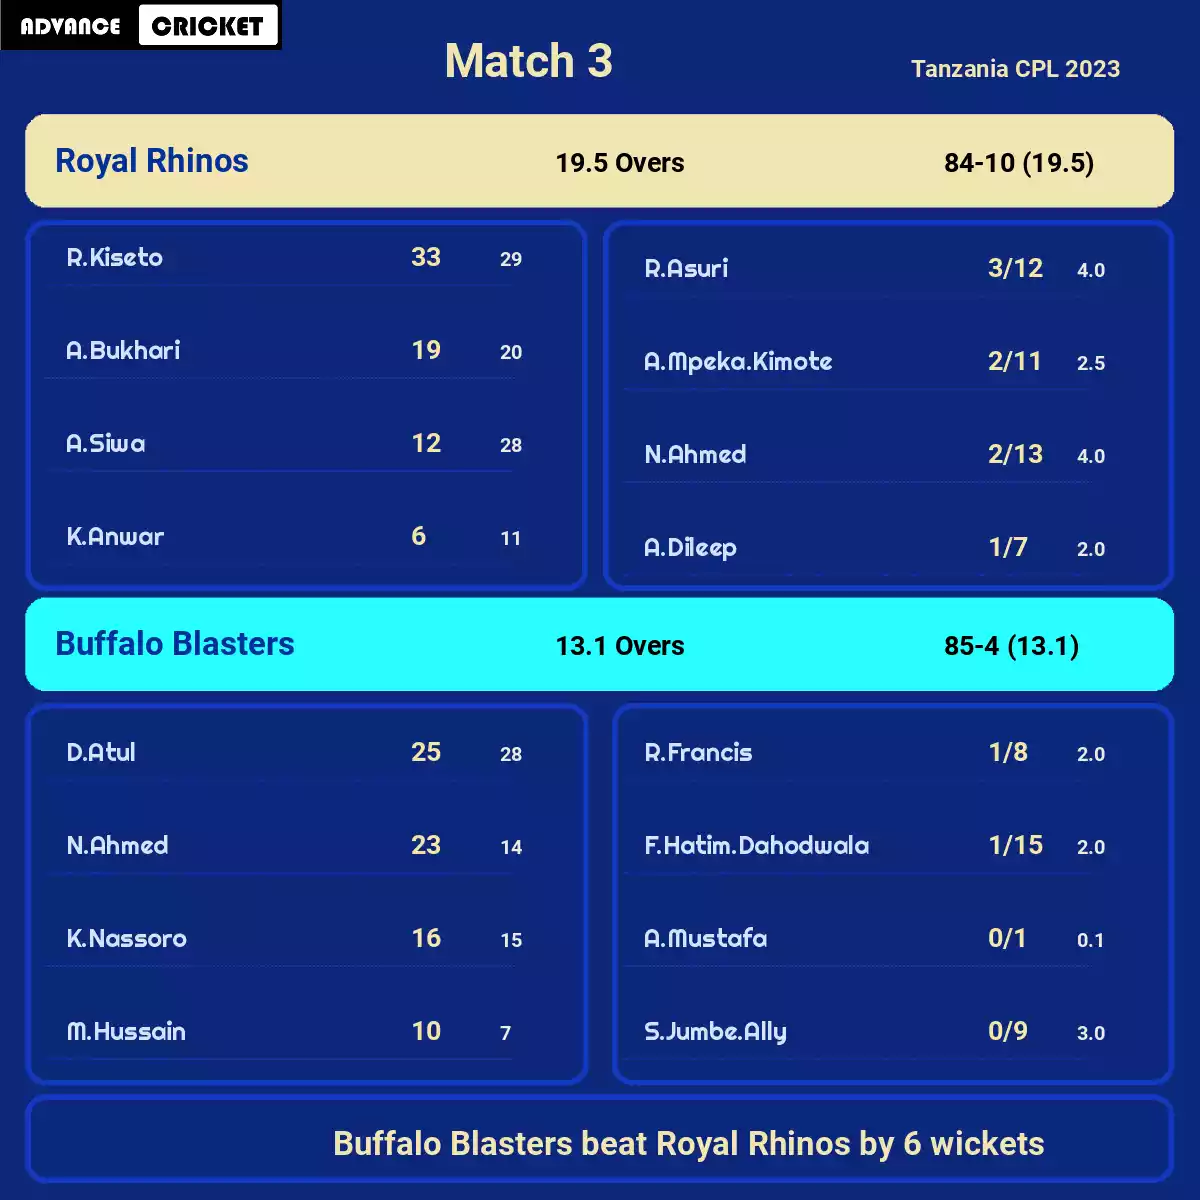 BUB vs RR Match 3 Tanzania CPL 2023